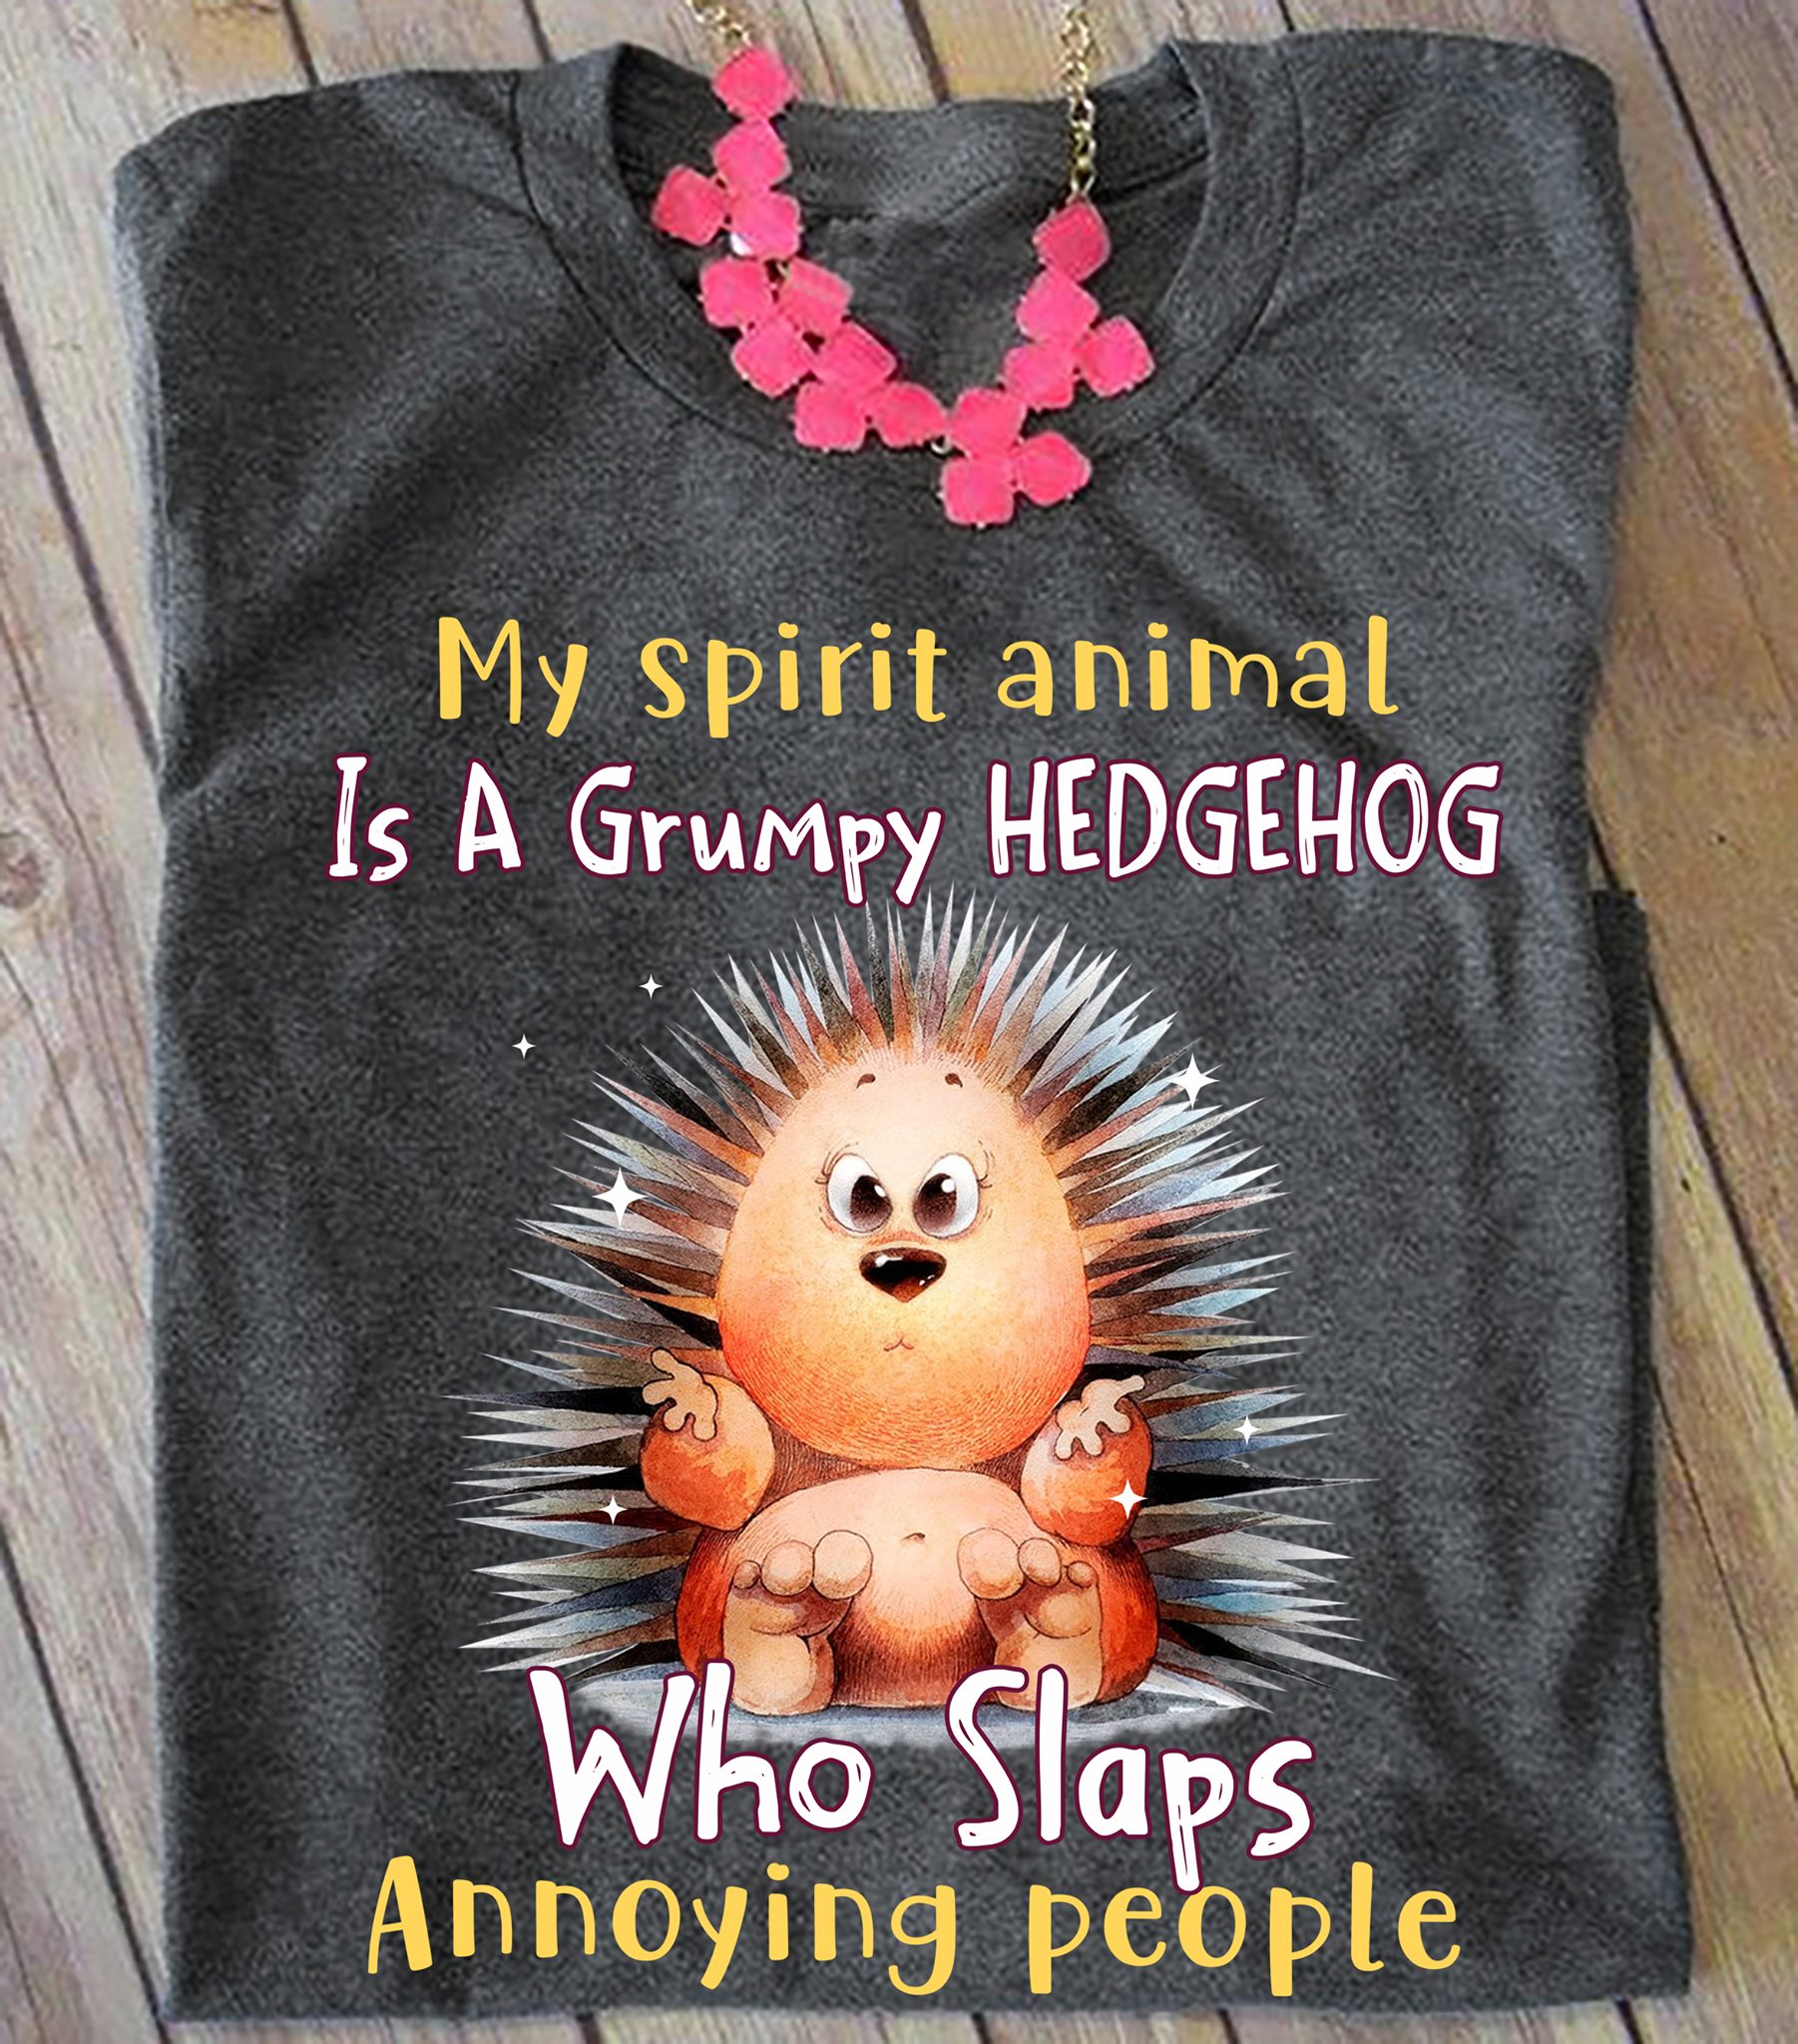 My spirit animal is a grumpy hedgehog who slaps annoying people